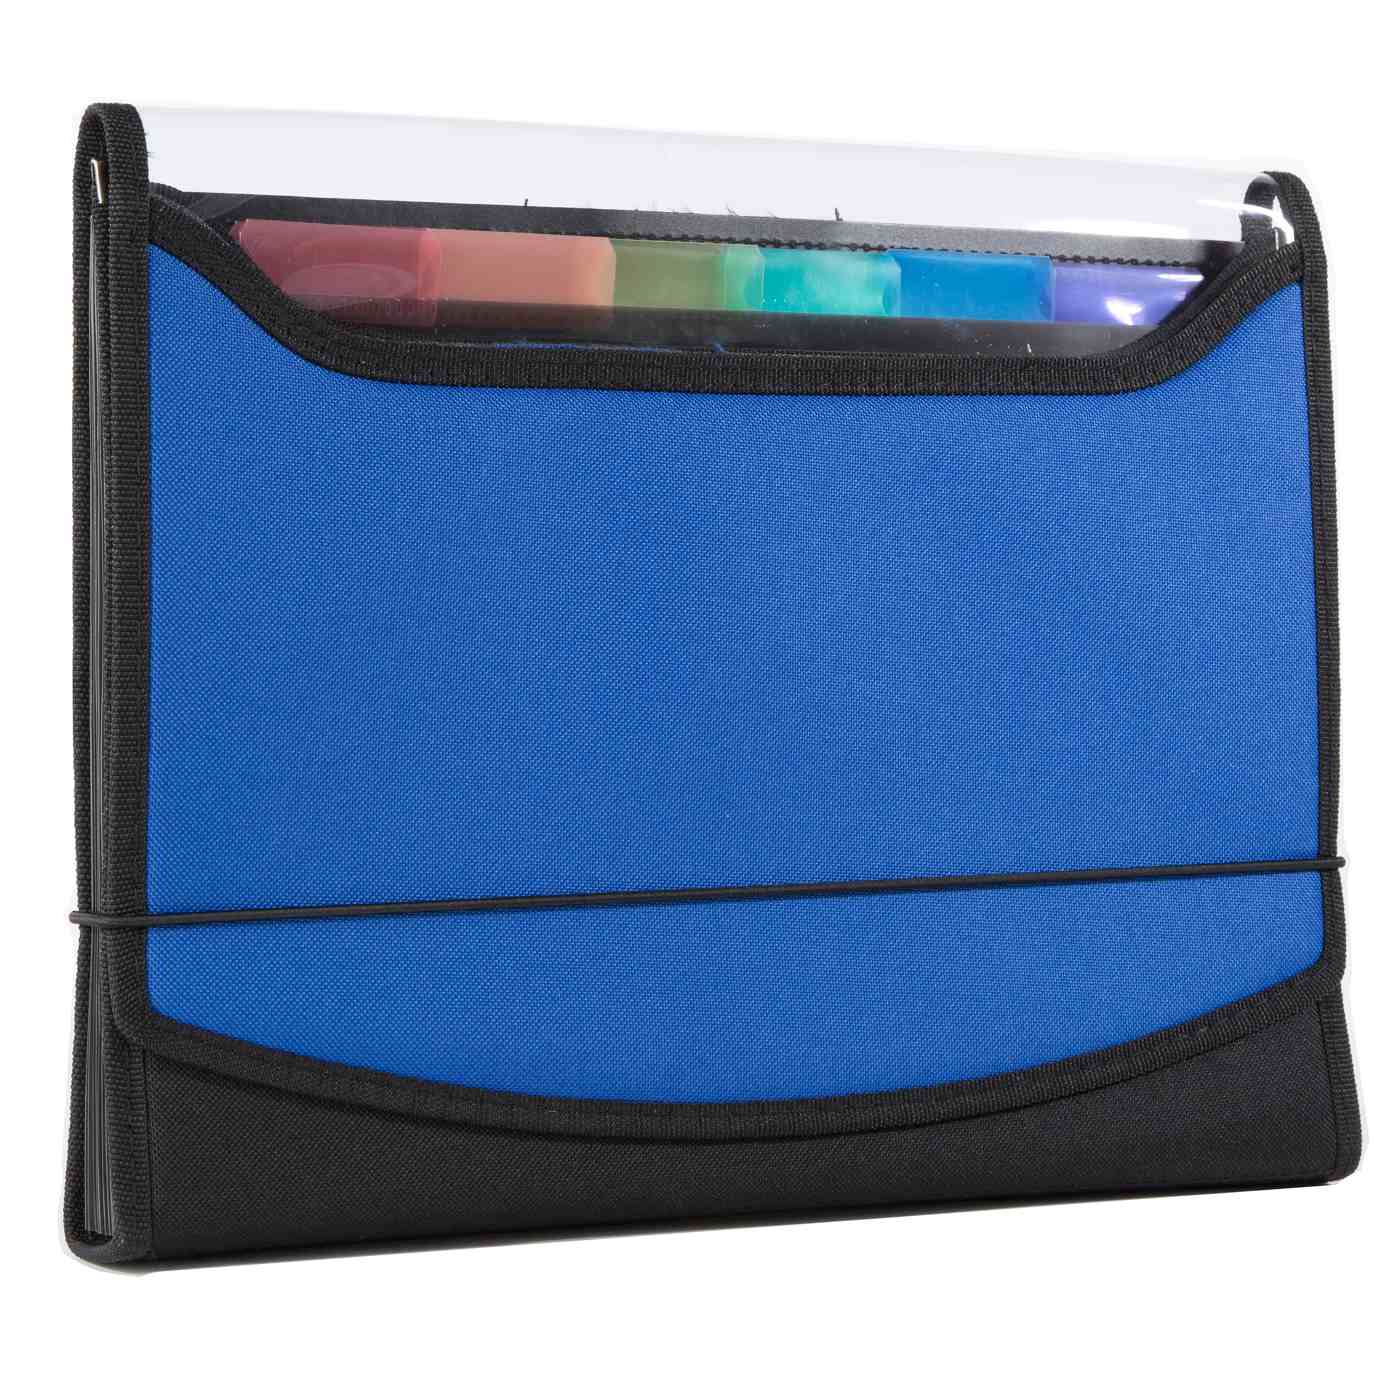 Filexec Products EZ View 13 Pocket Soft Touch Expanding File Folder - Blue; image 1 of 2